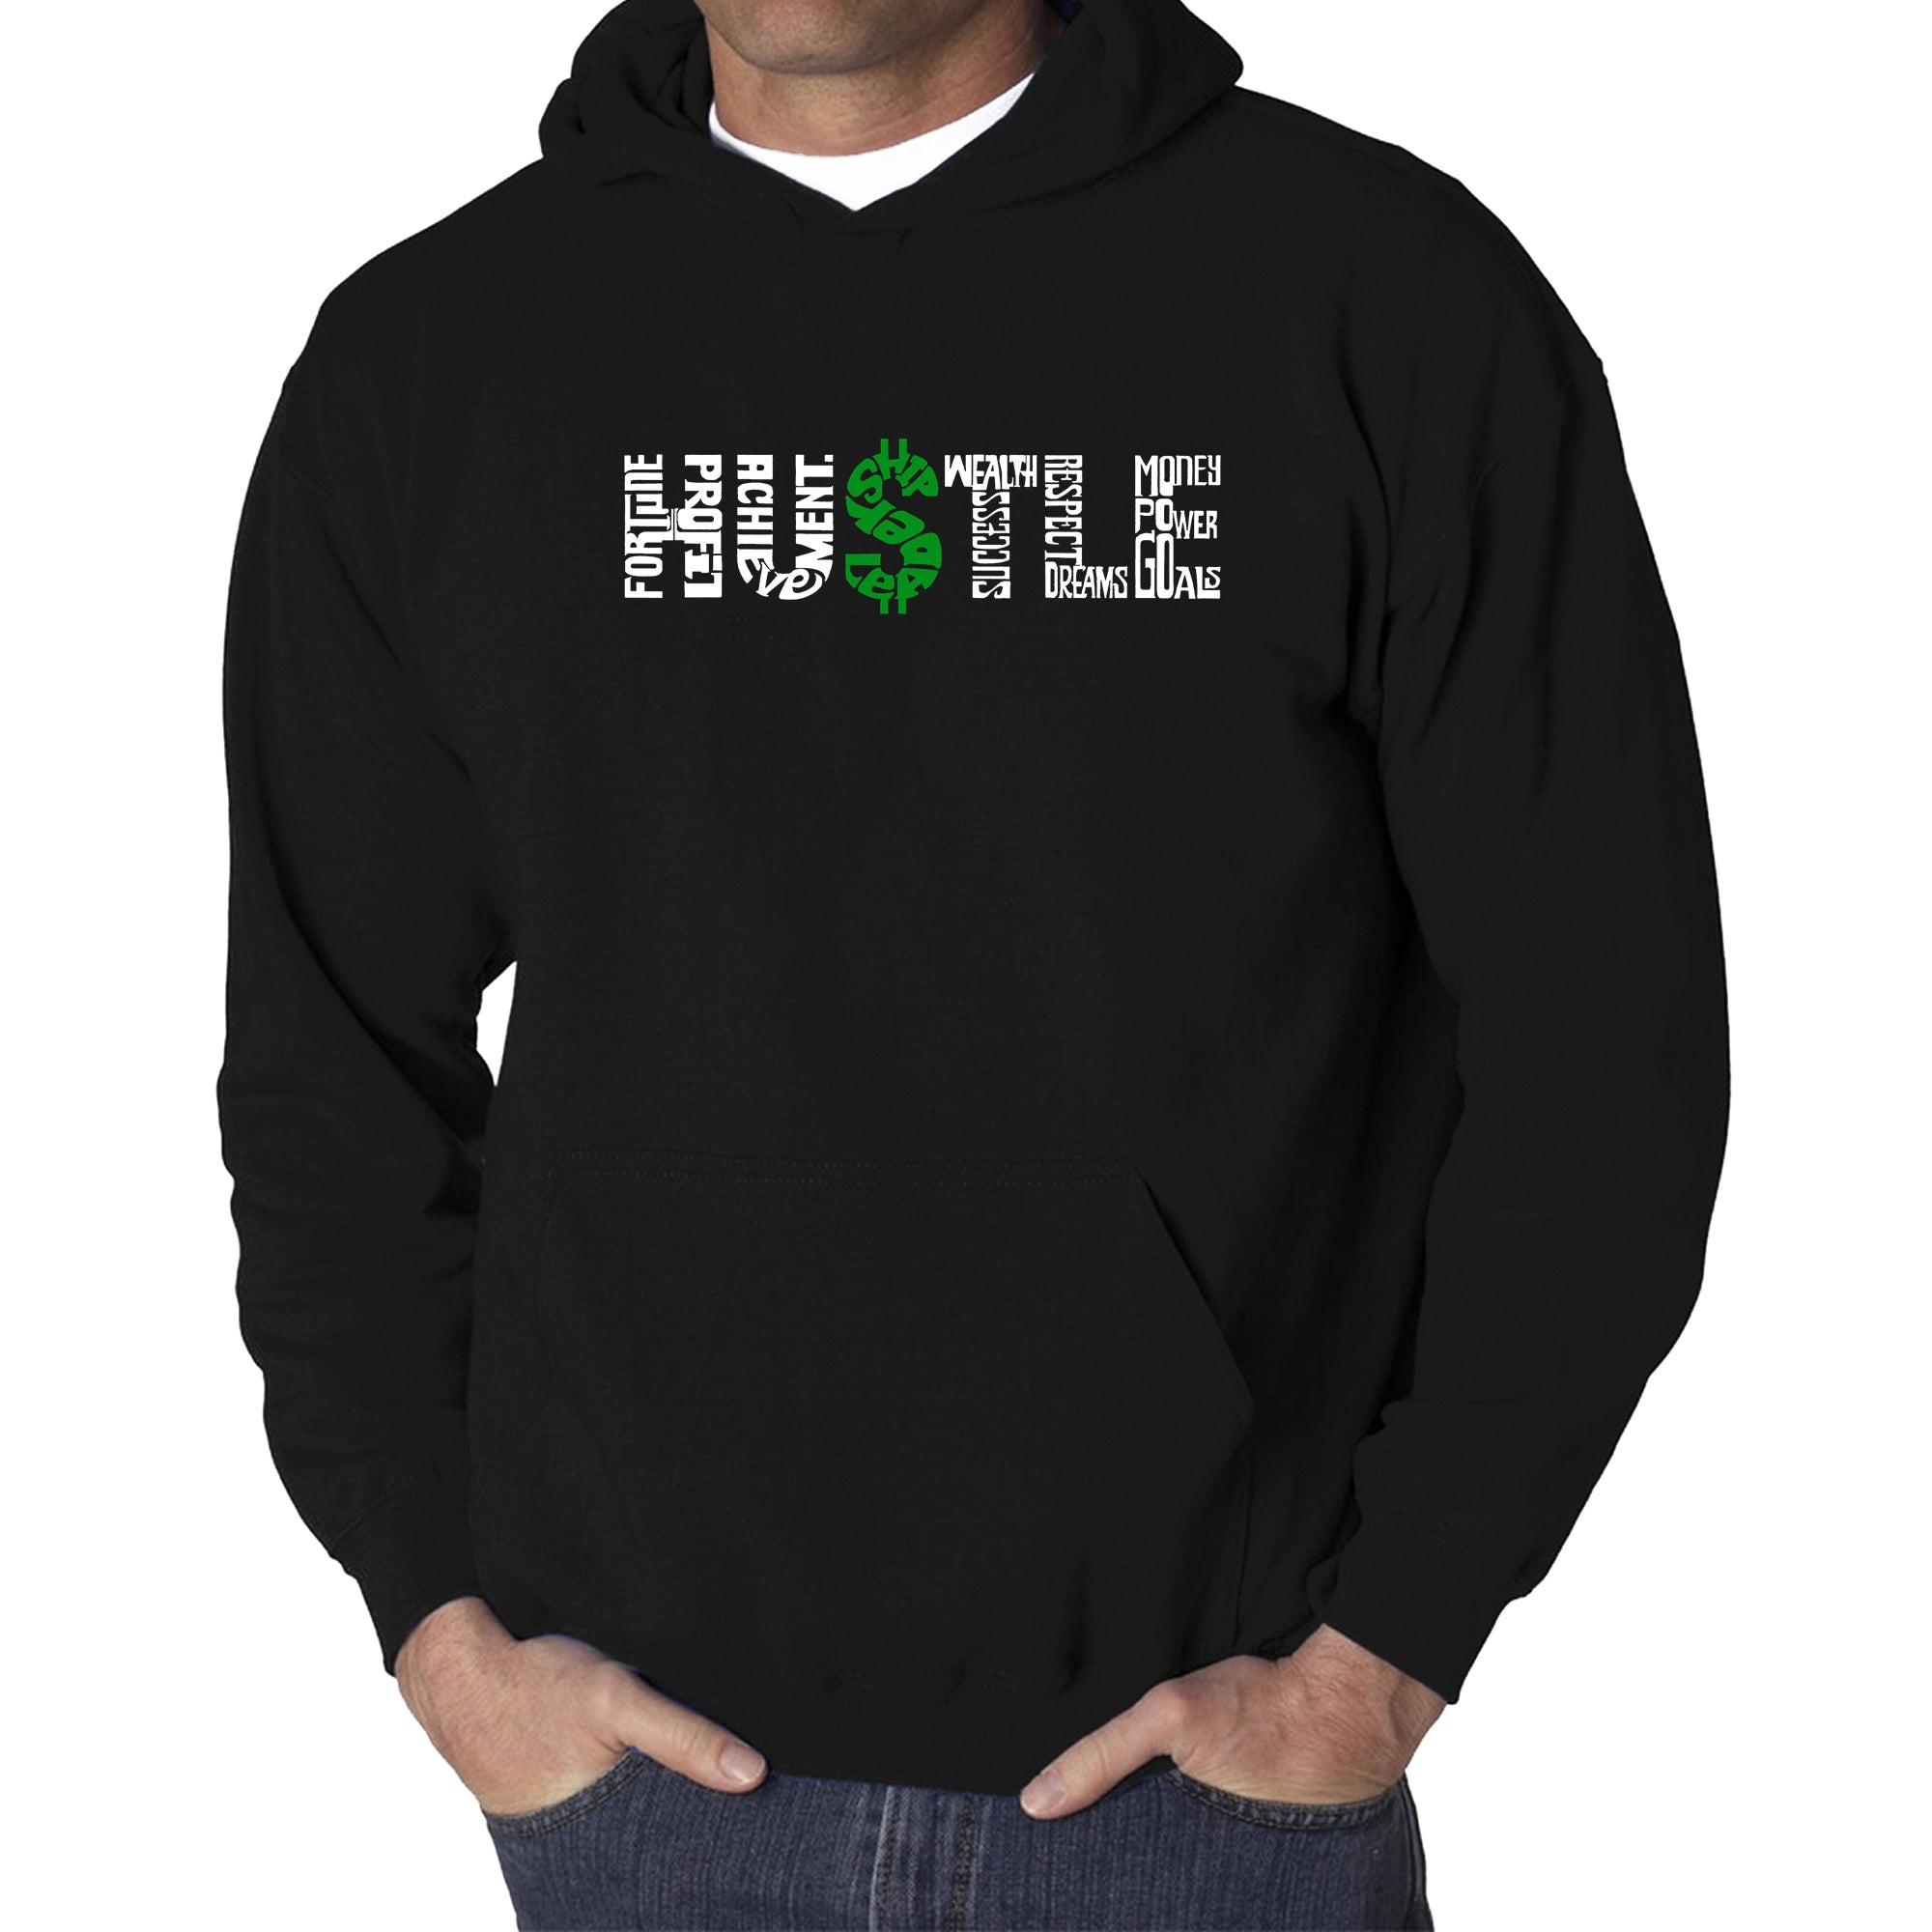 Hustle Hoodie | All I Know is Hustle | Ultra-Soft Hooded Sweatshirt in  White or Grey